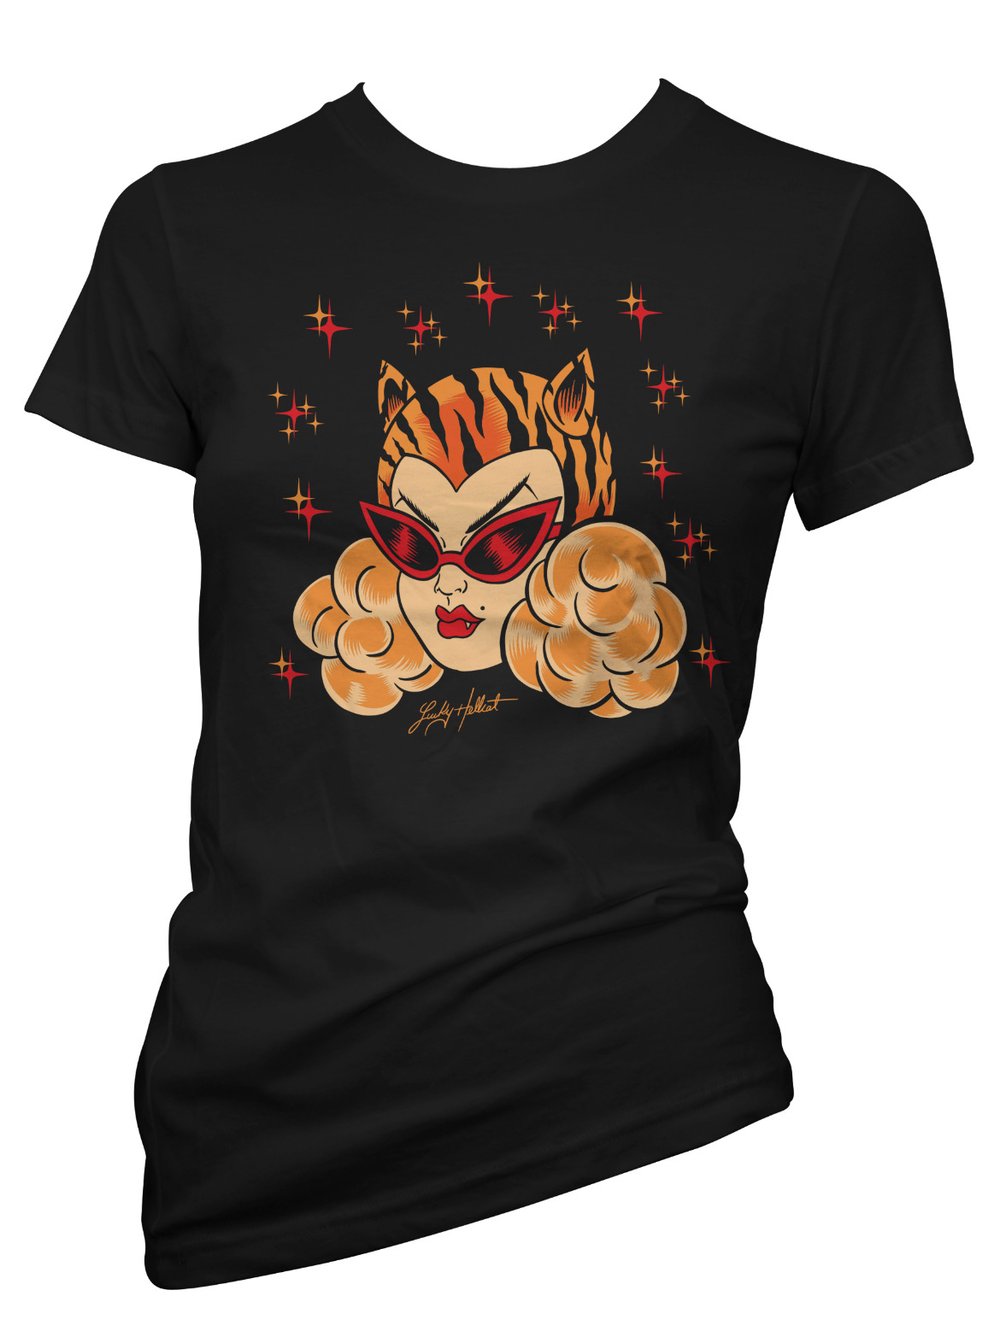 Woman's Tiger Lady T-shirt 